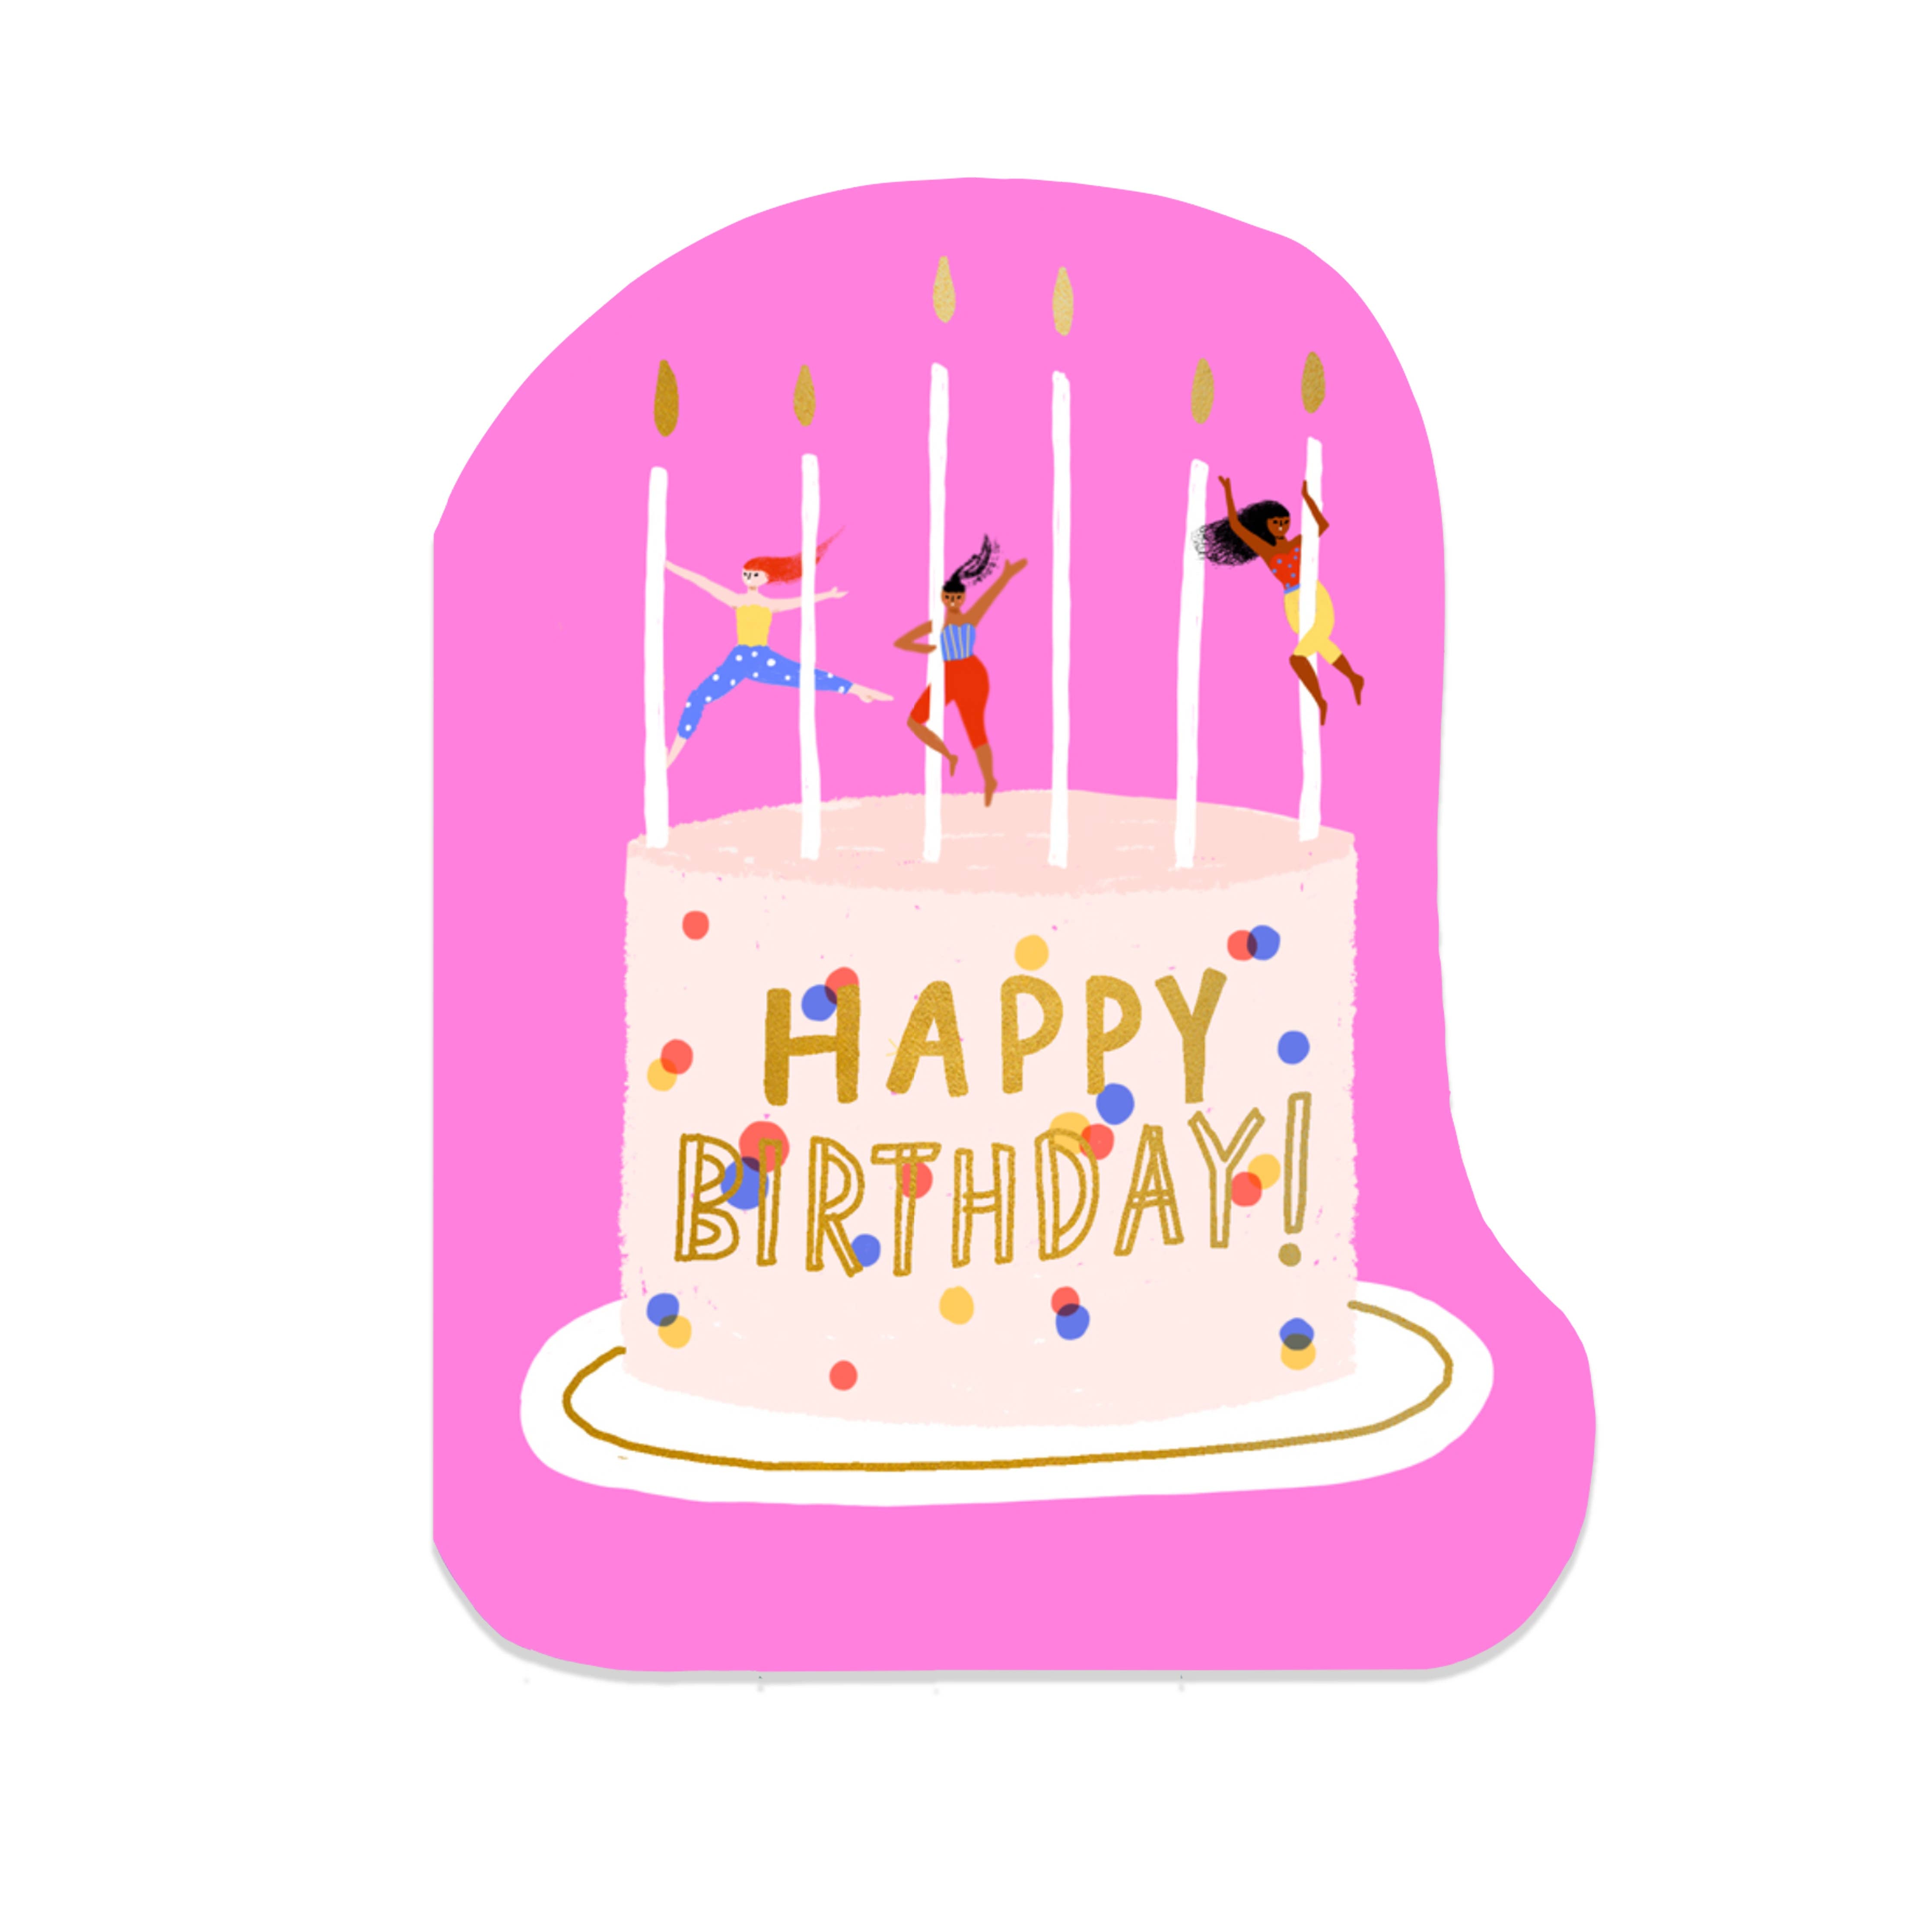 Circus Cake - Shaped Birthday Card - Proper